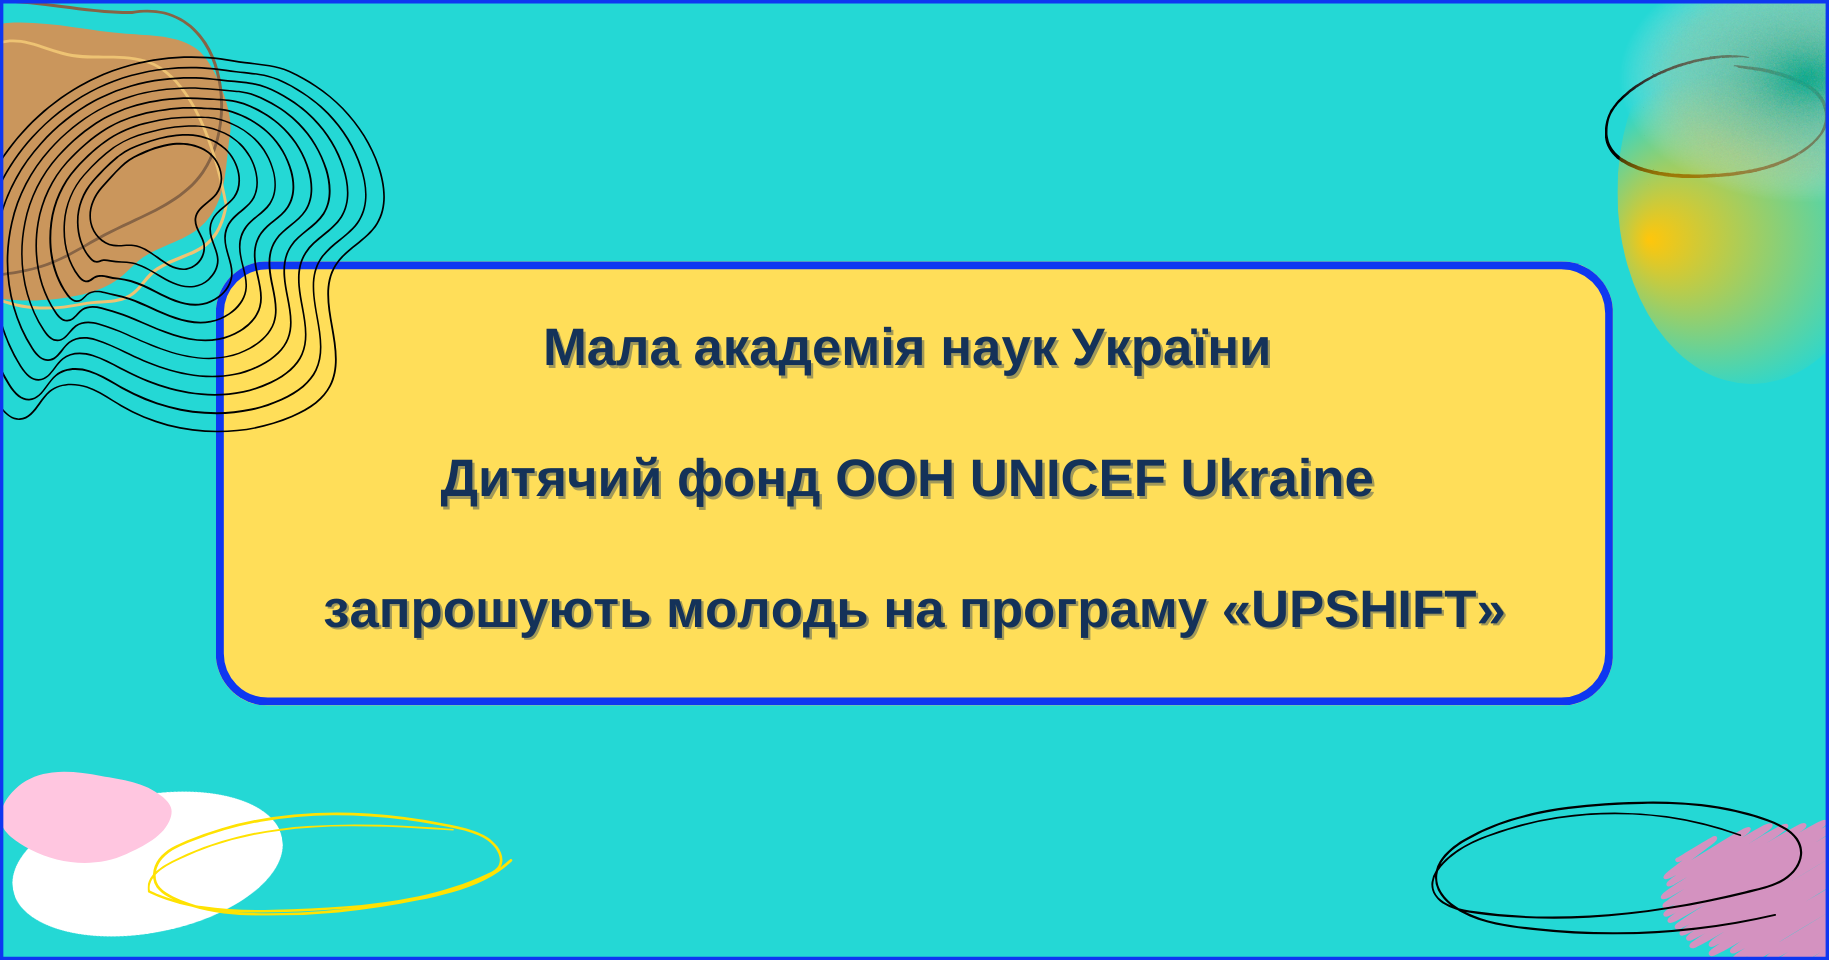 Мала академія наук України та Дитячий фонд ООН UNICEF Ukraine запрошують молодь на програму «UPSHIFT»